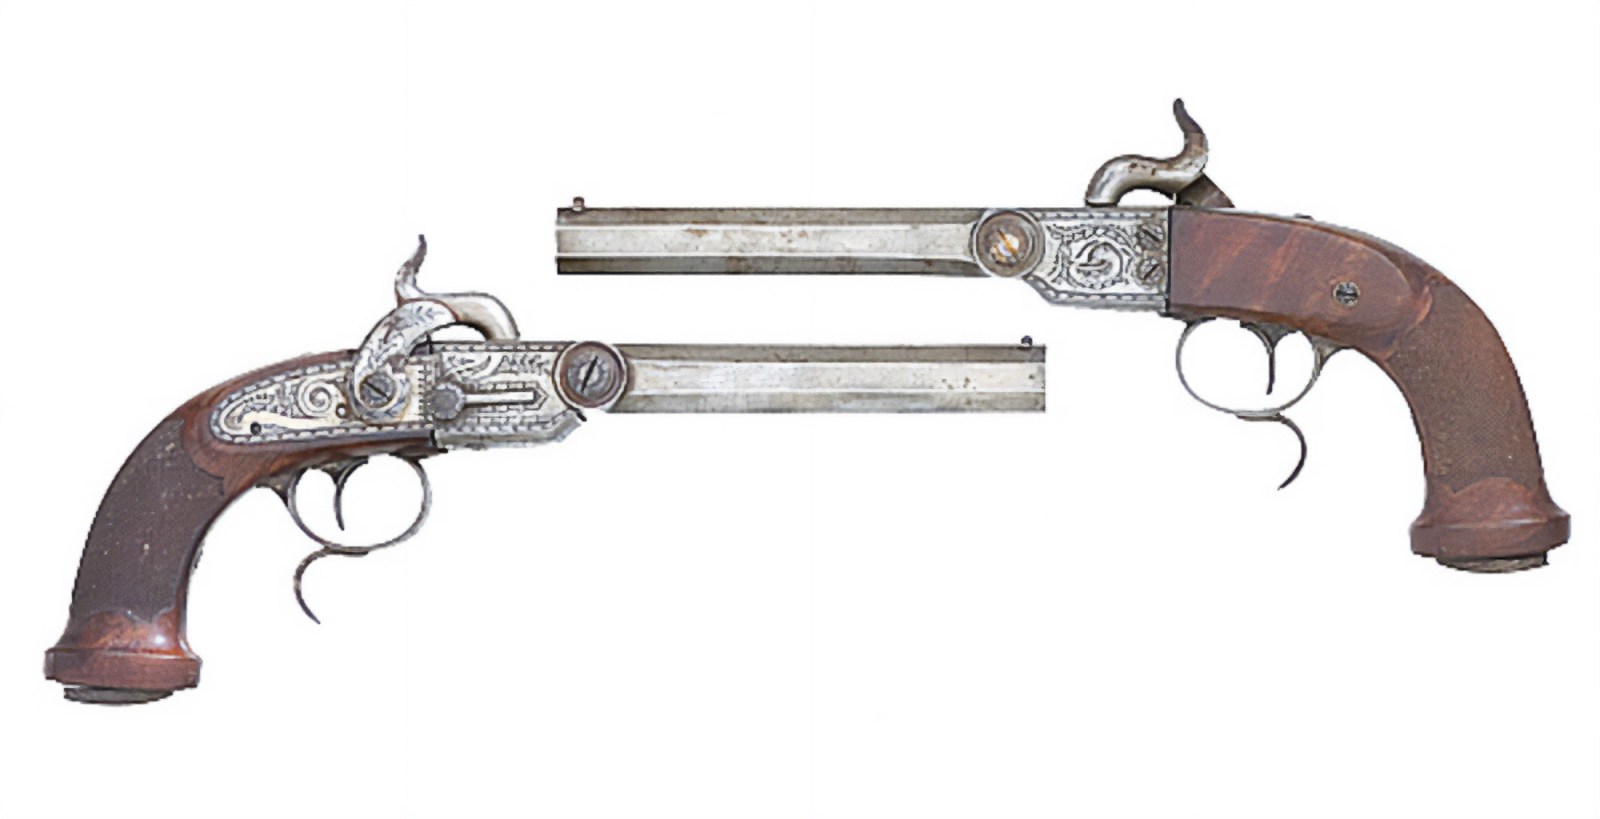 Beringer-marked Pauly-style pistol. Cowans (2017) (5)